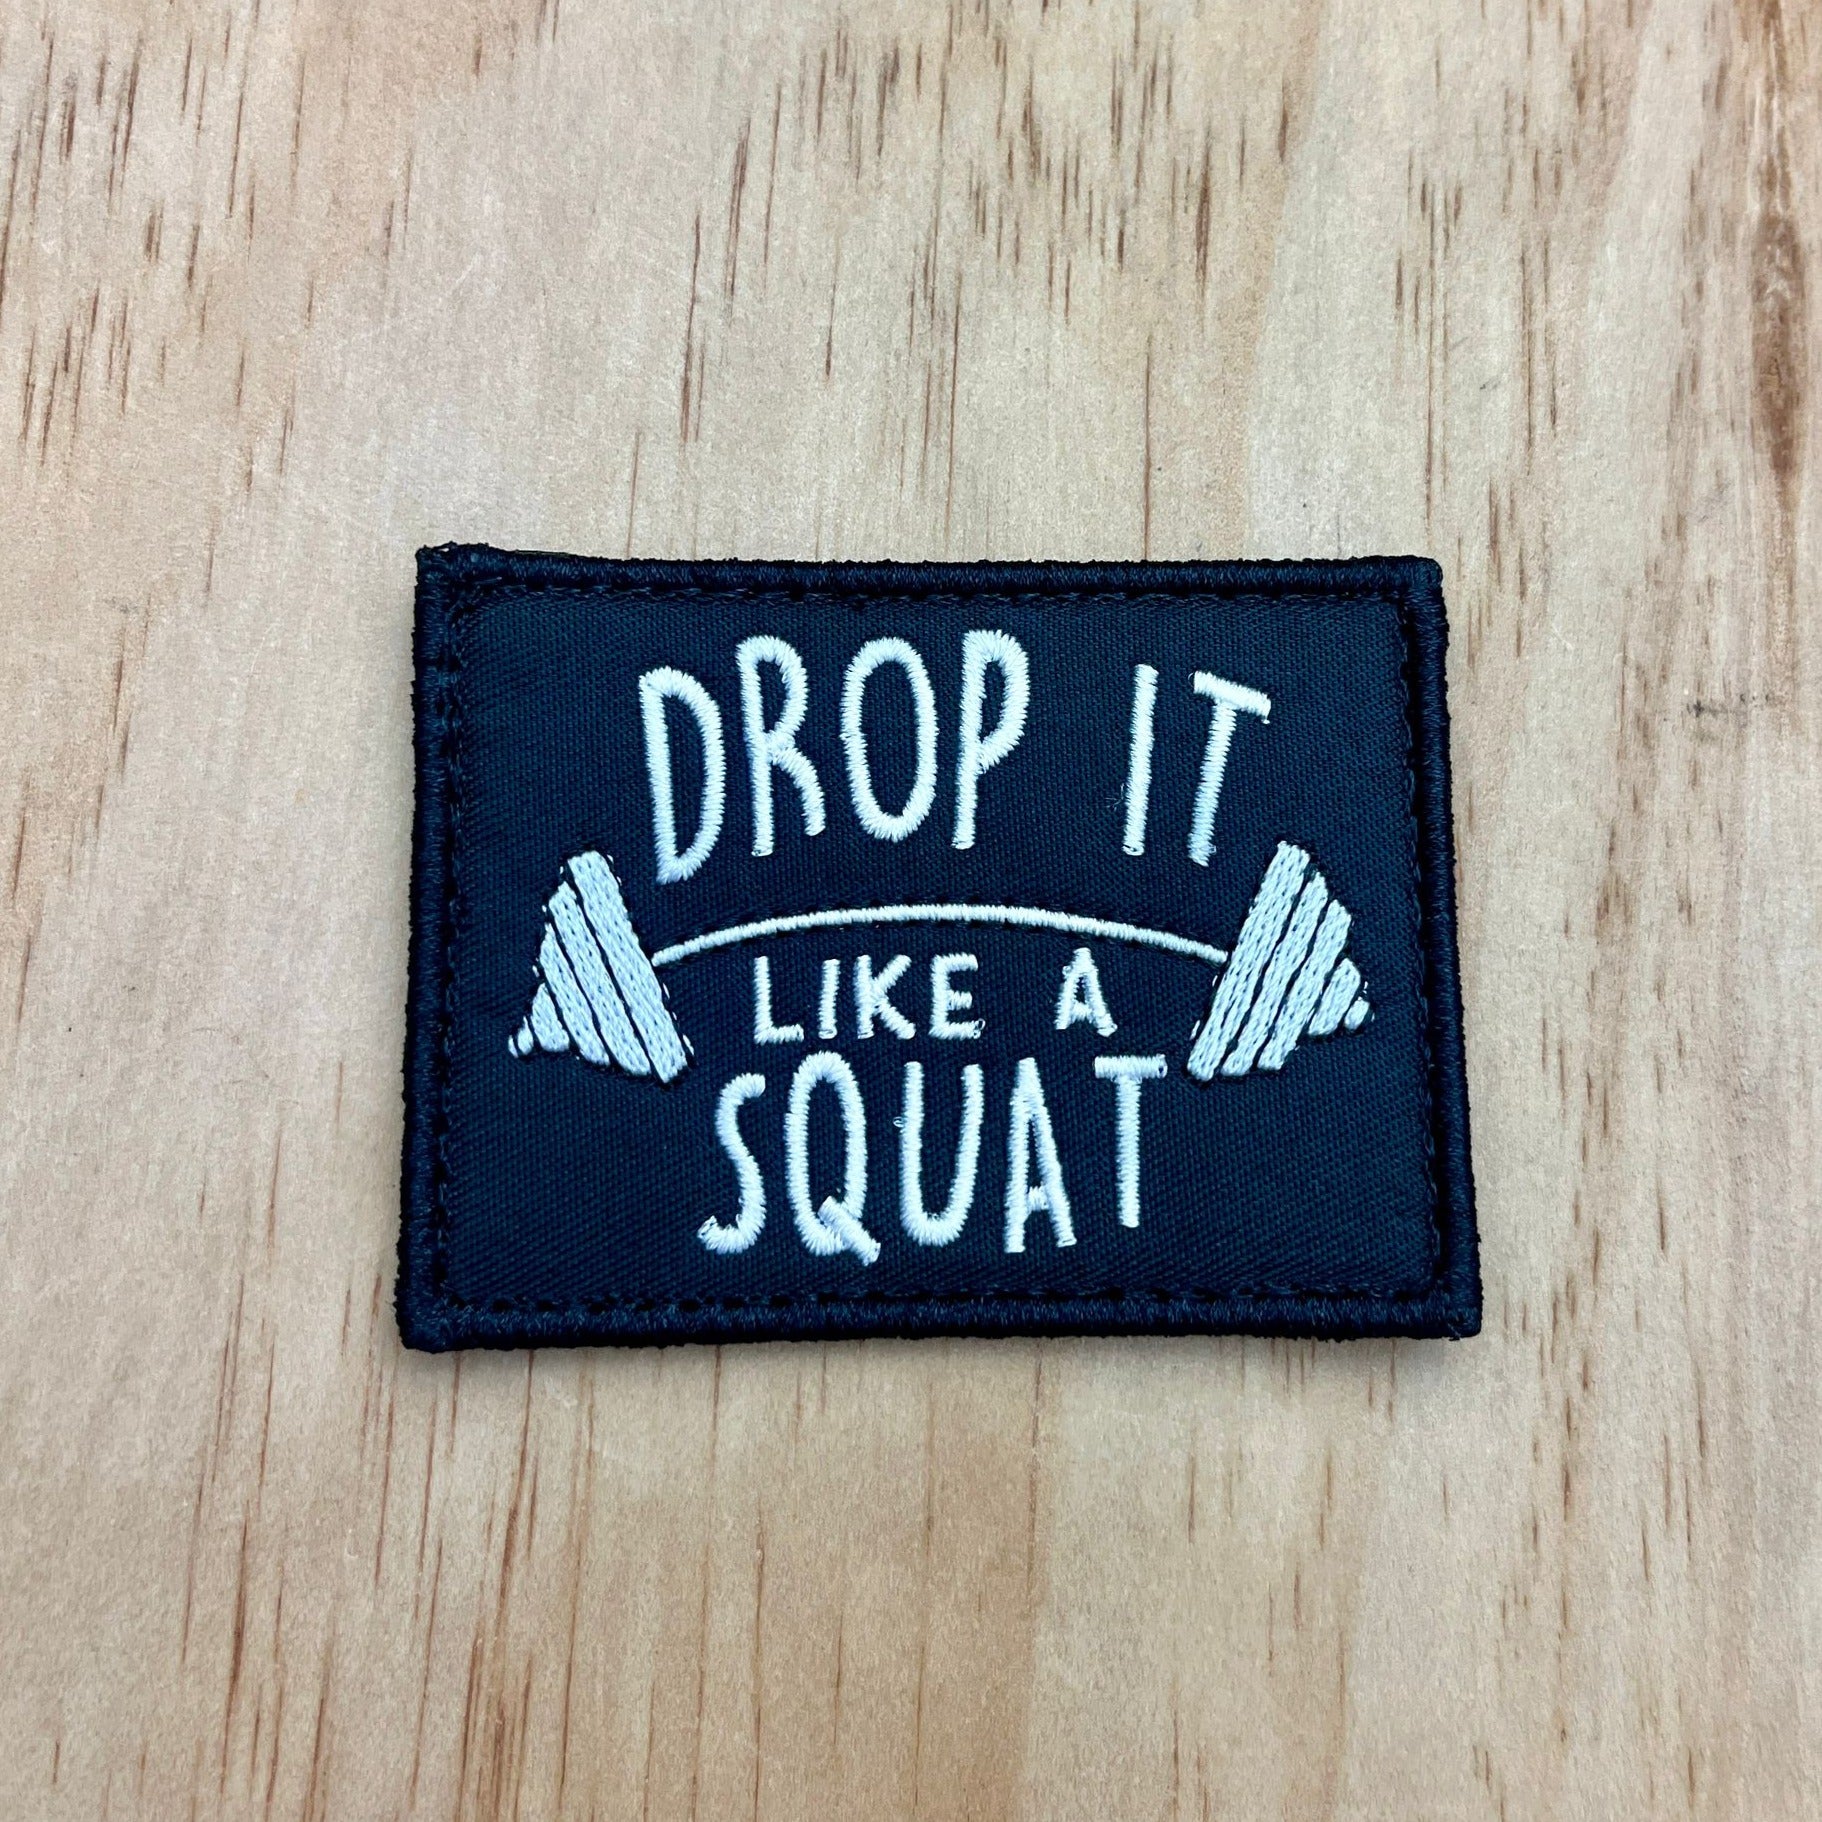 Drop It Like A Squat patch